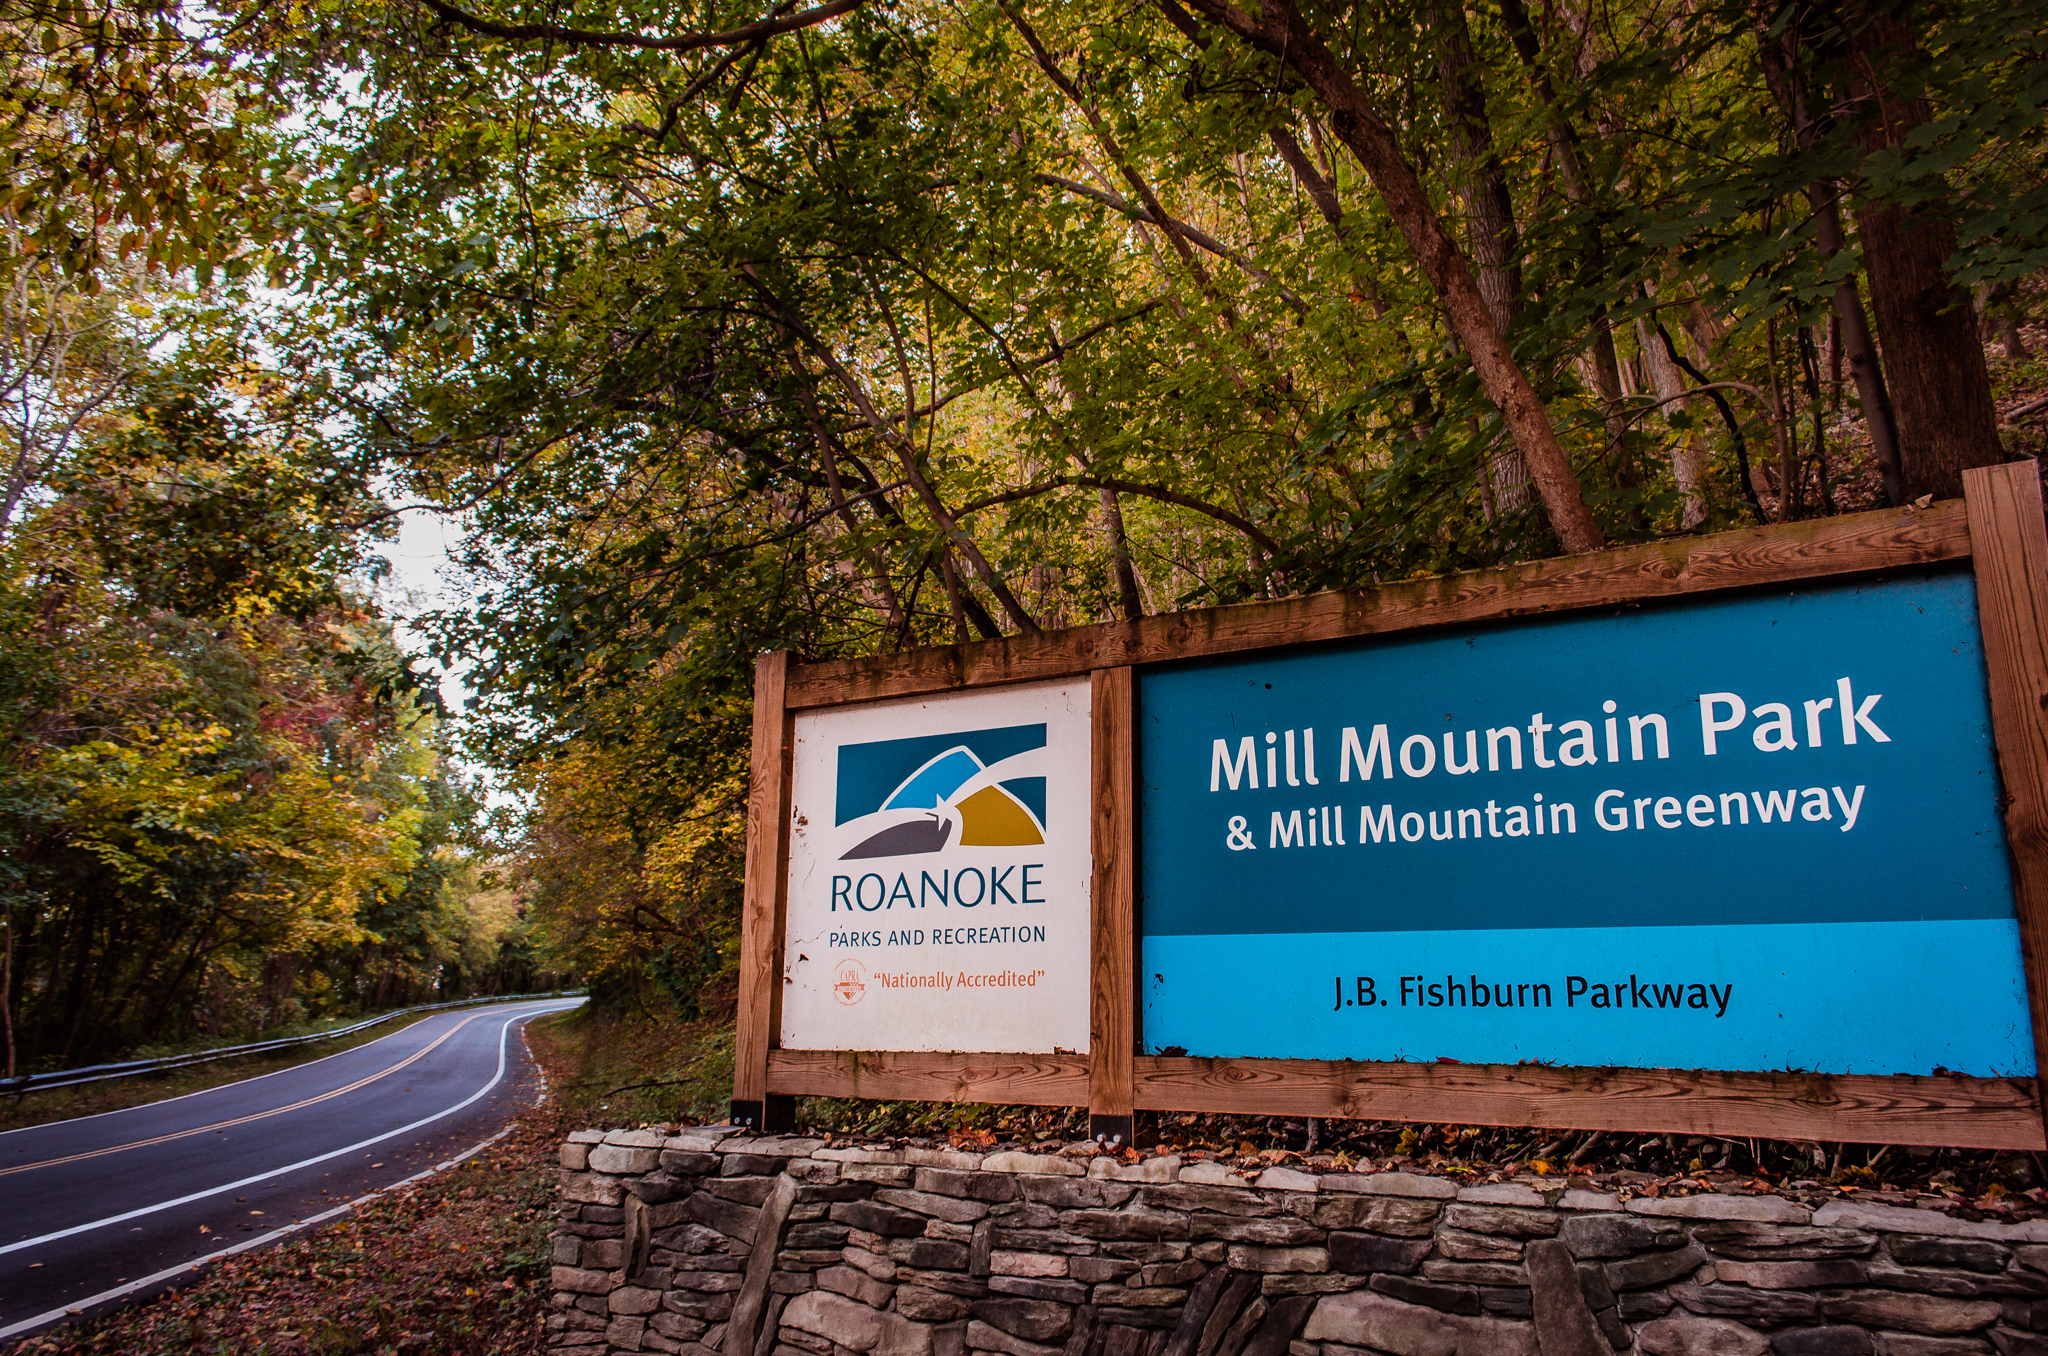 Entrance sign for Mill Mountain Park near Roanoke